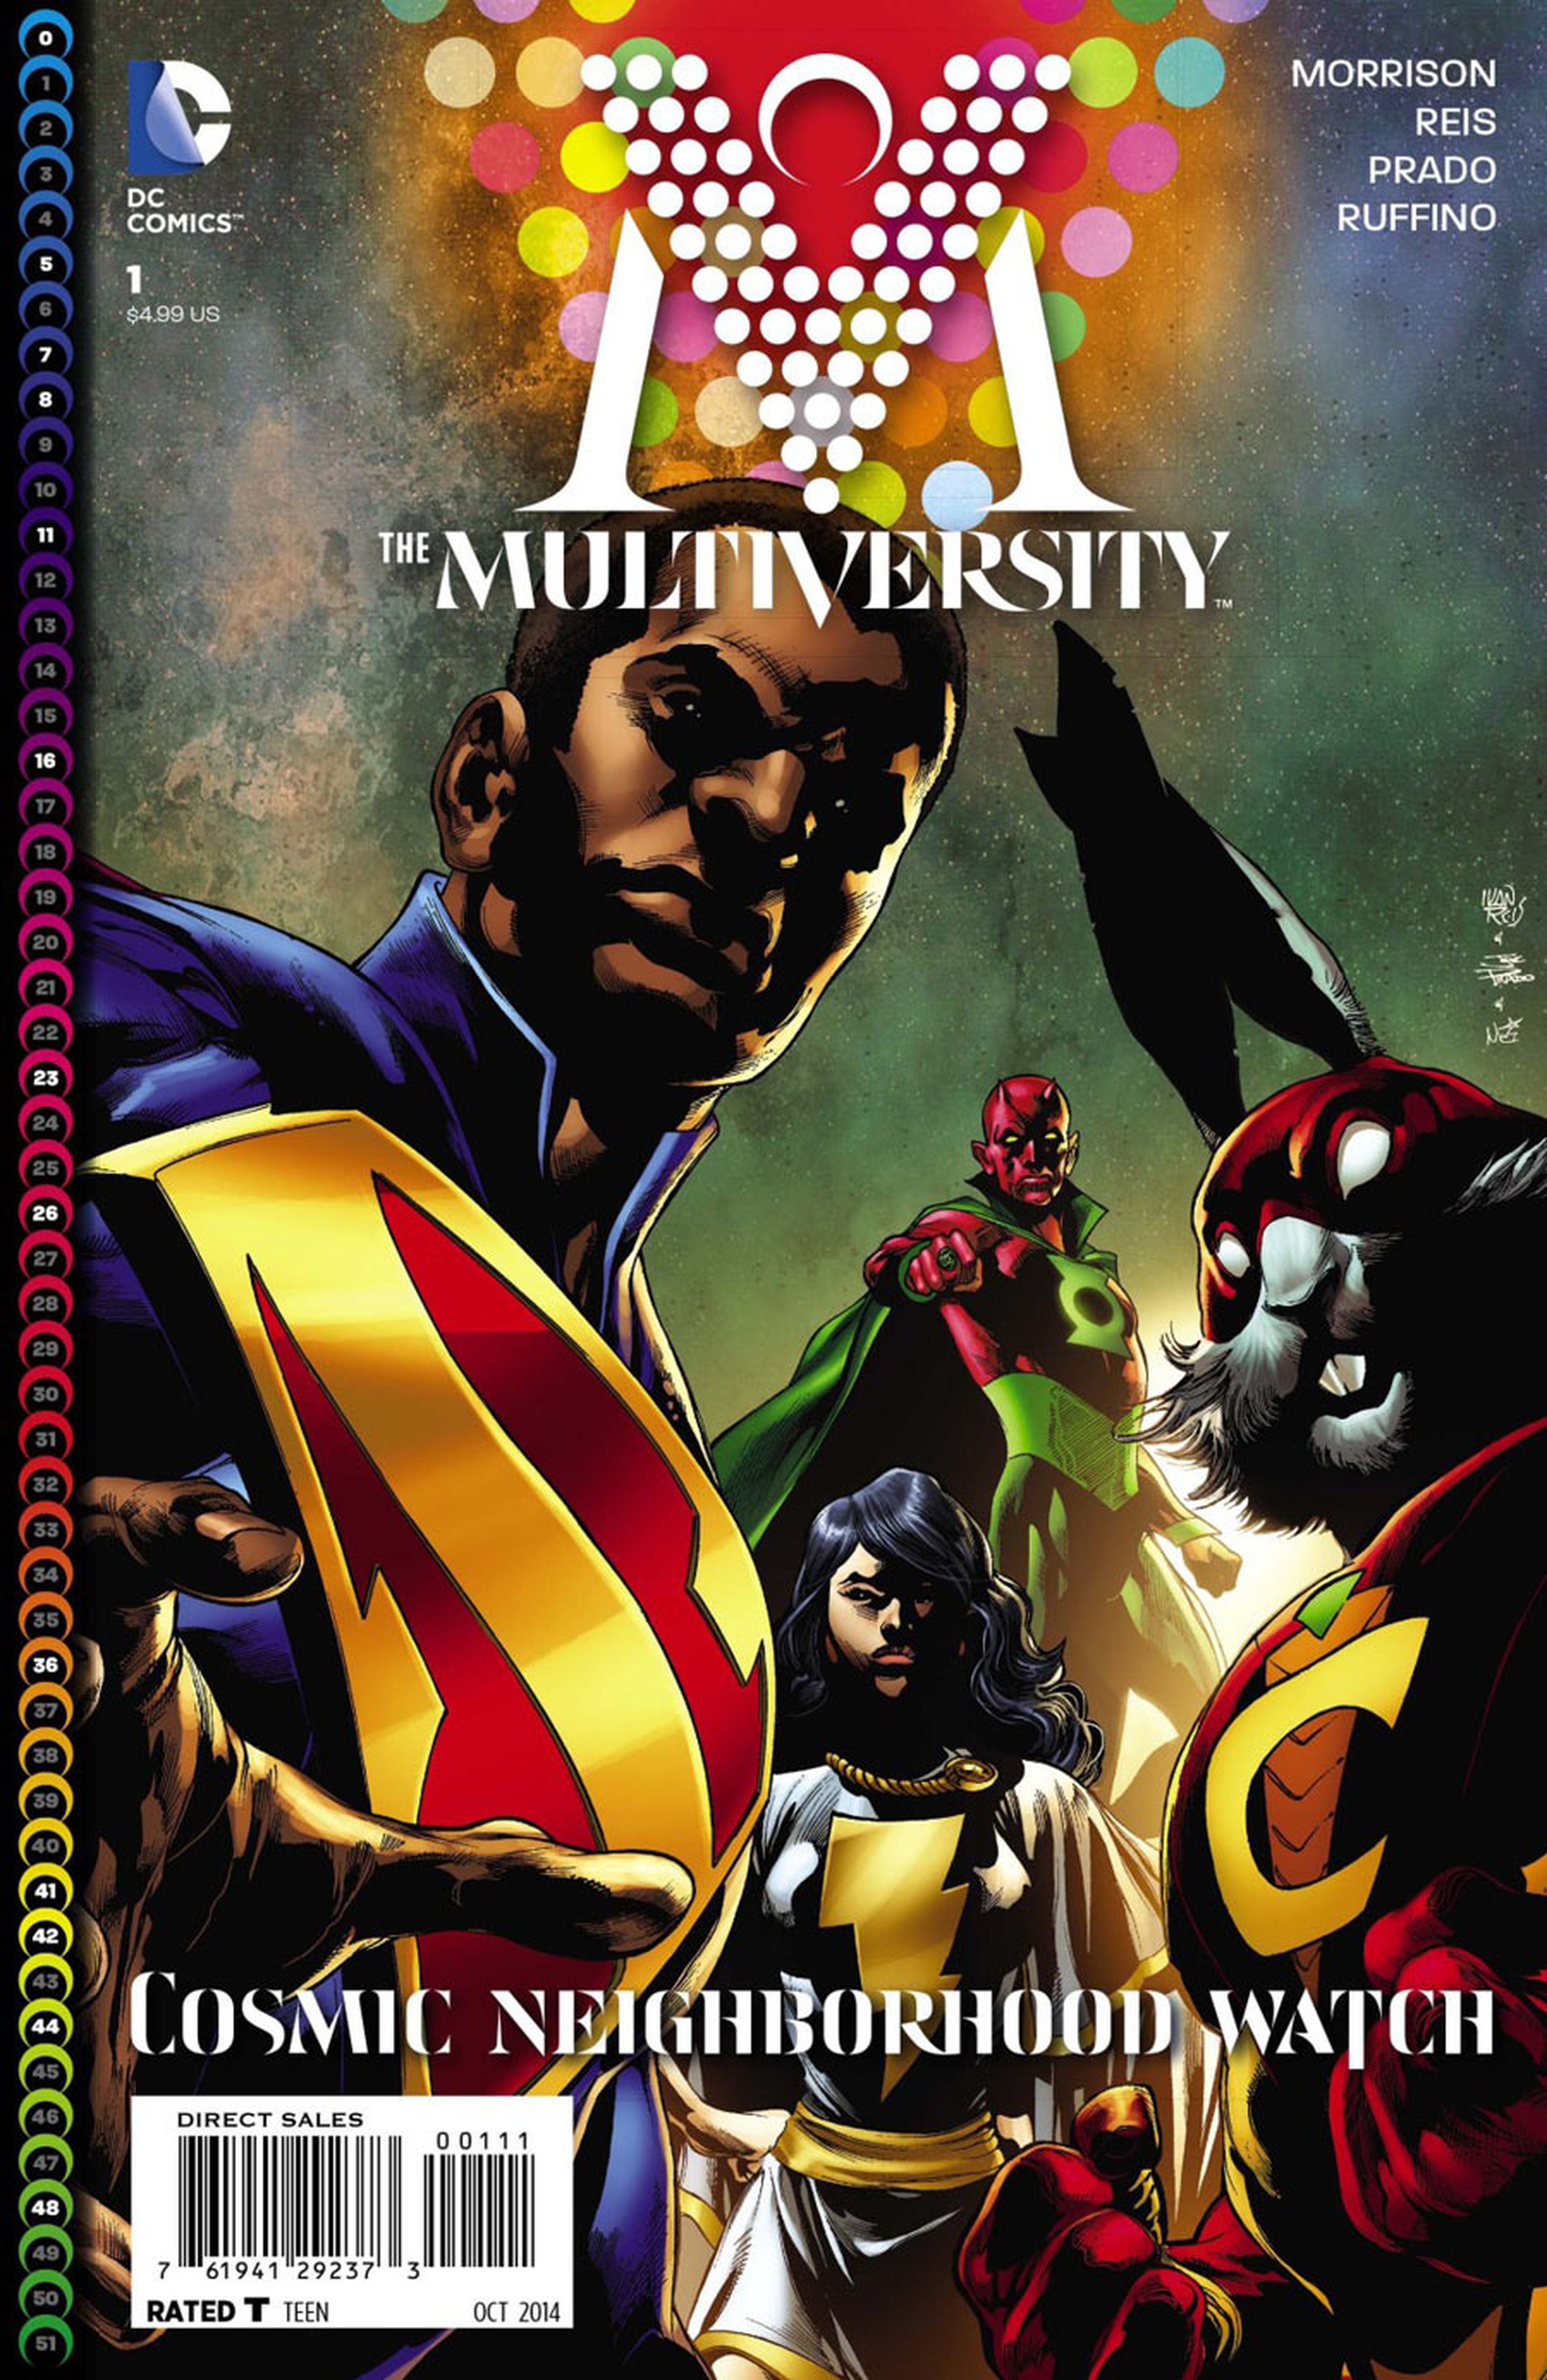 Avance de The Multiversity, de Grant Morrison